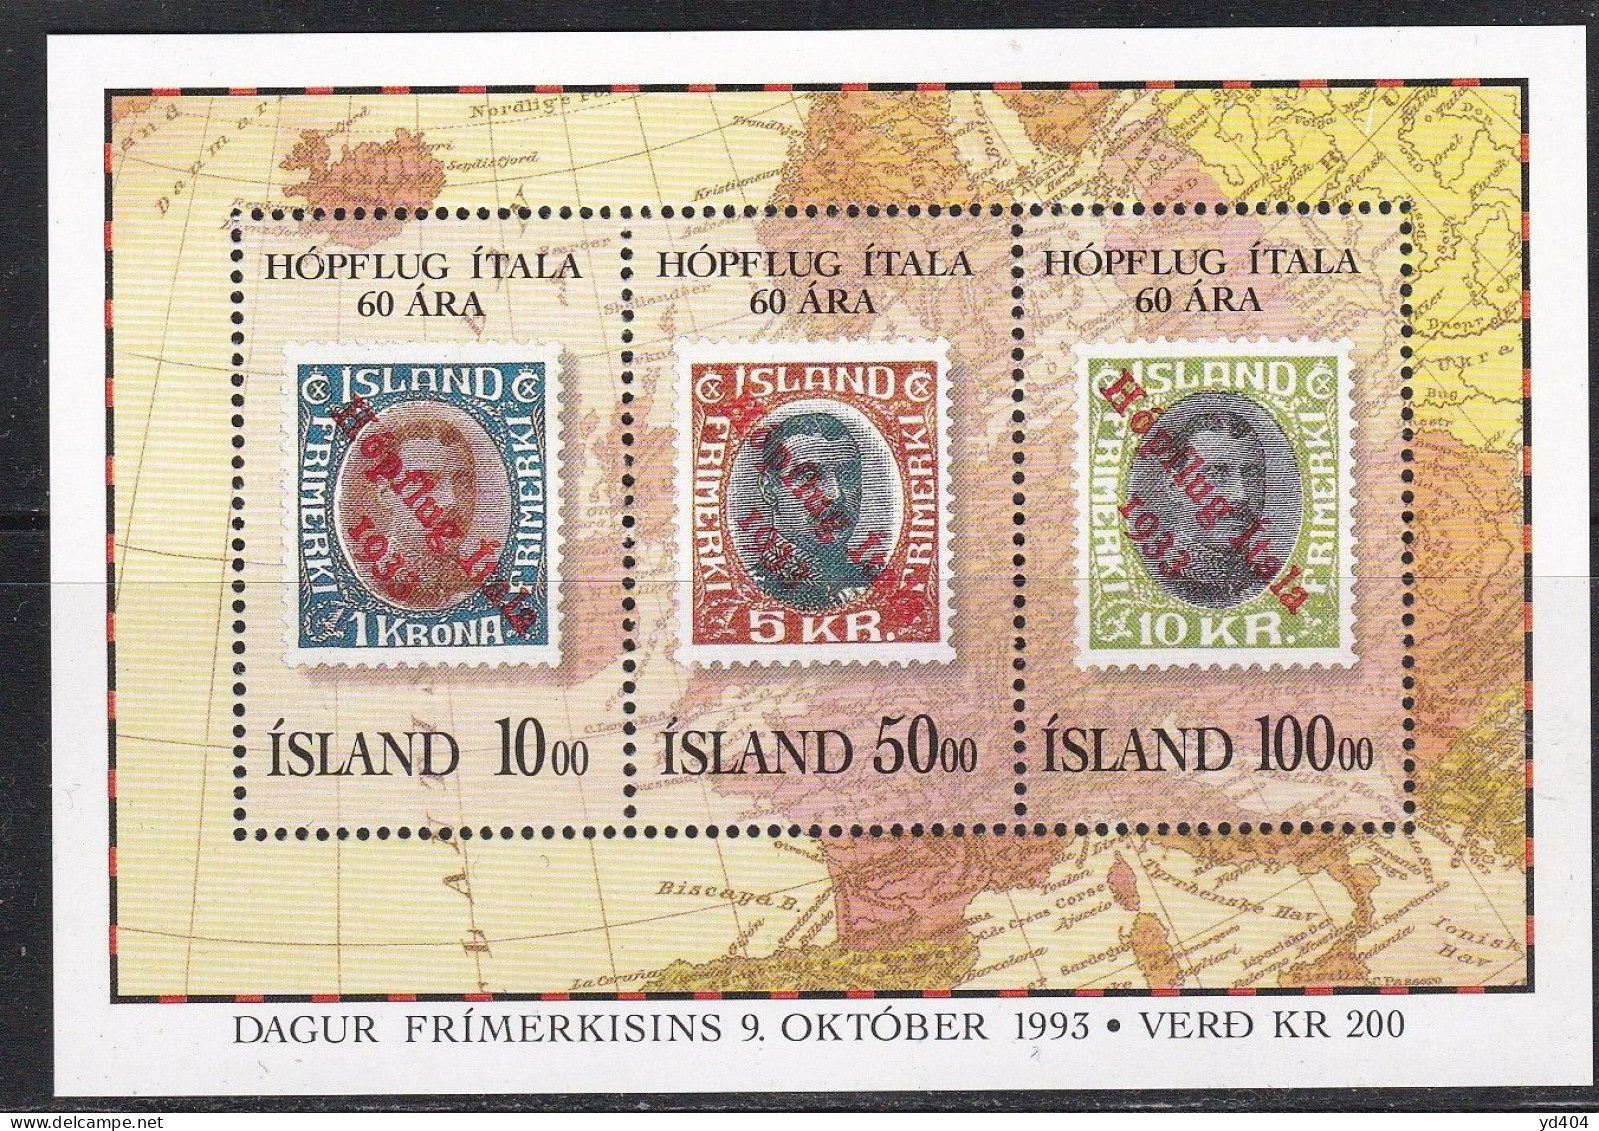 IS482 – ISLANDE – ICELAND – 1993 – JOURNEE DU TIMBRE – SG # MS 810 MNH 12,25 € - Blocks & Kleinbögen